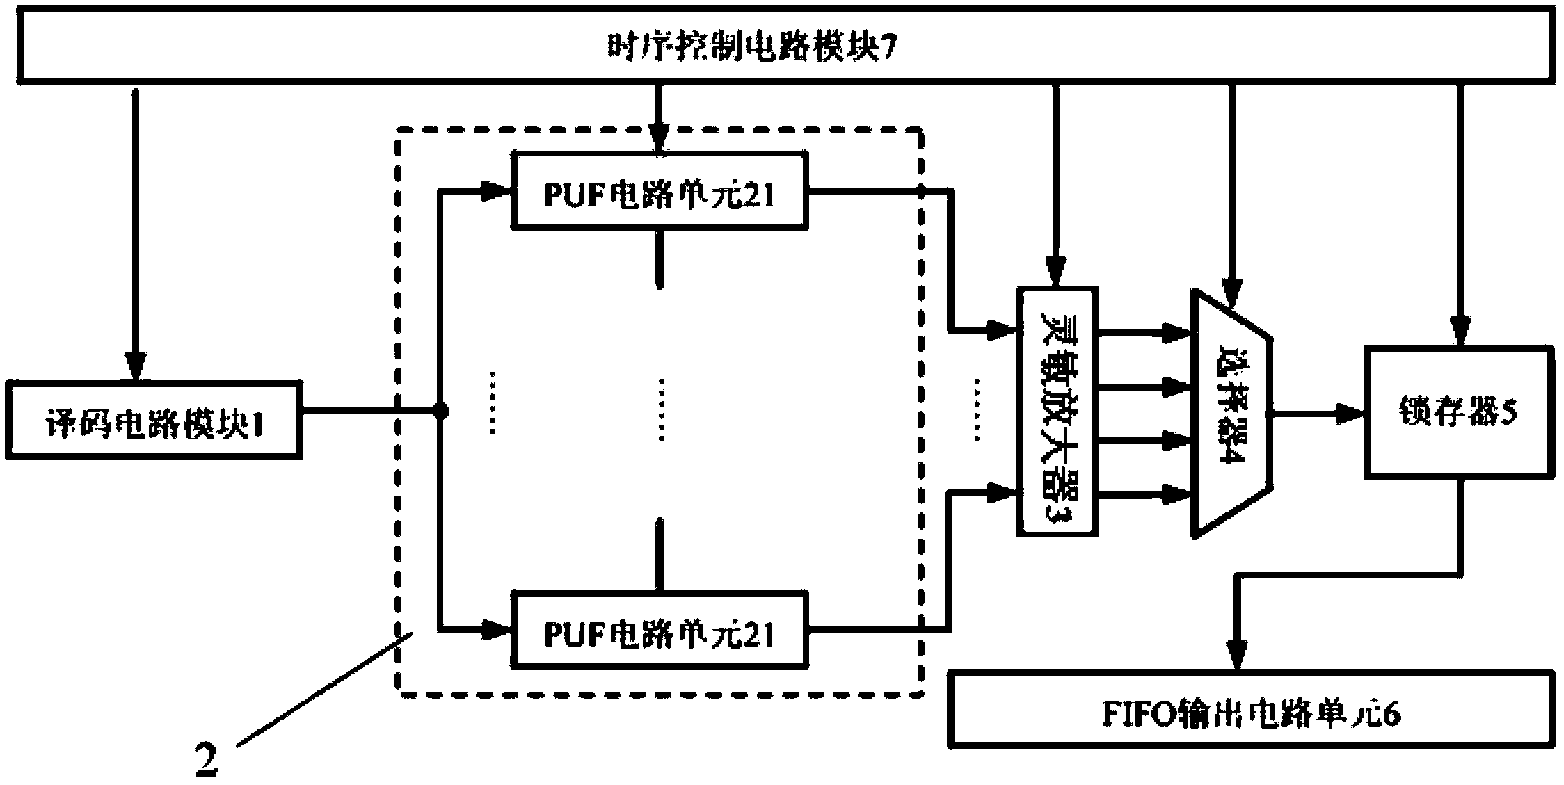 High-steady-state multi-port PUF (Poly Urethane Foam) circuit